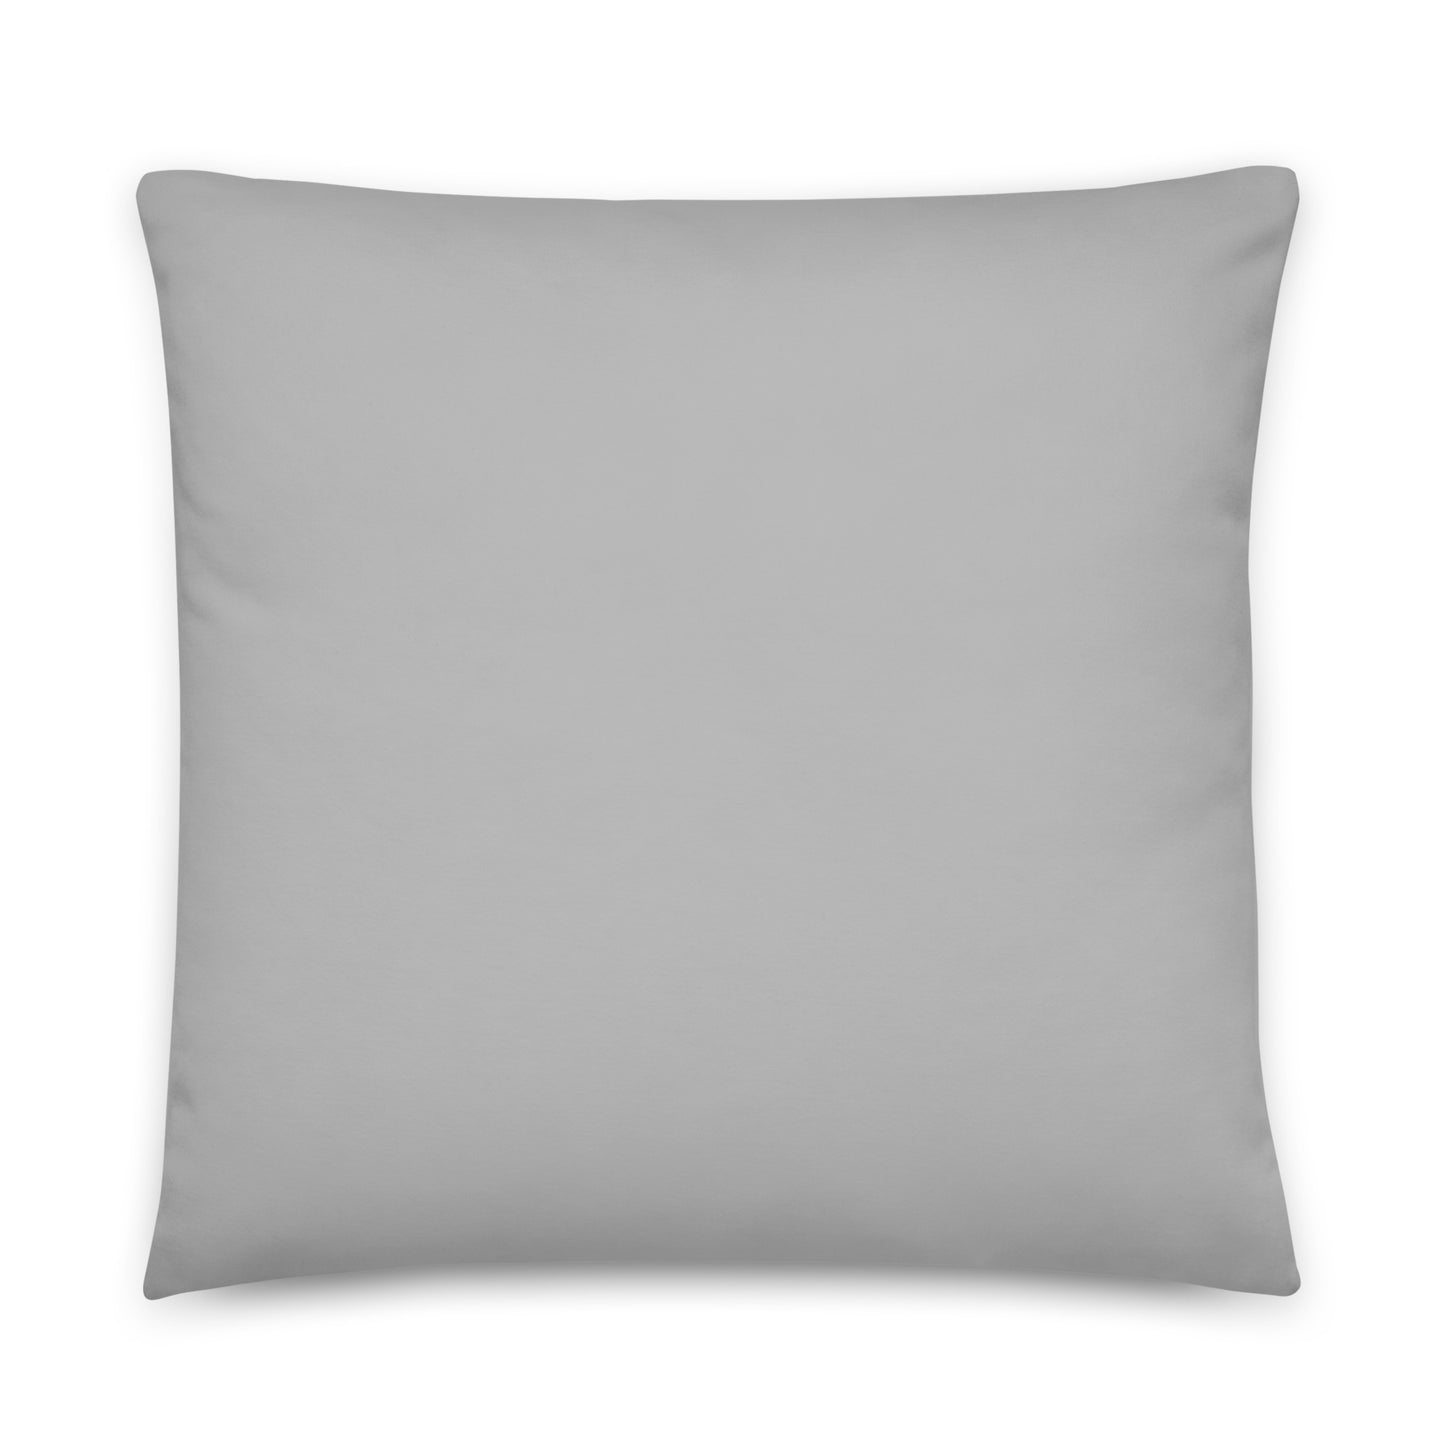 Basic Grey - Sustainably Made Pillows